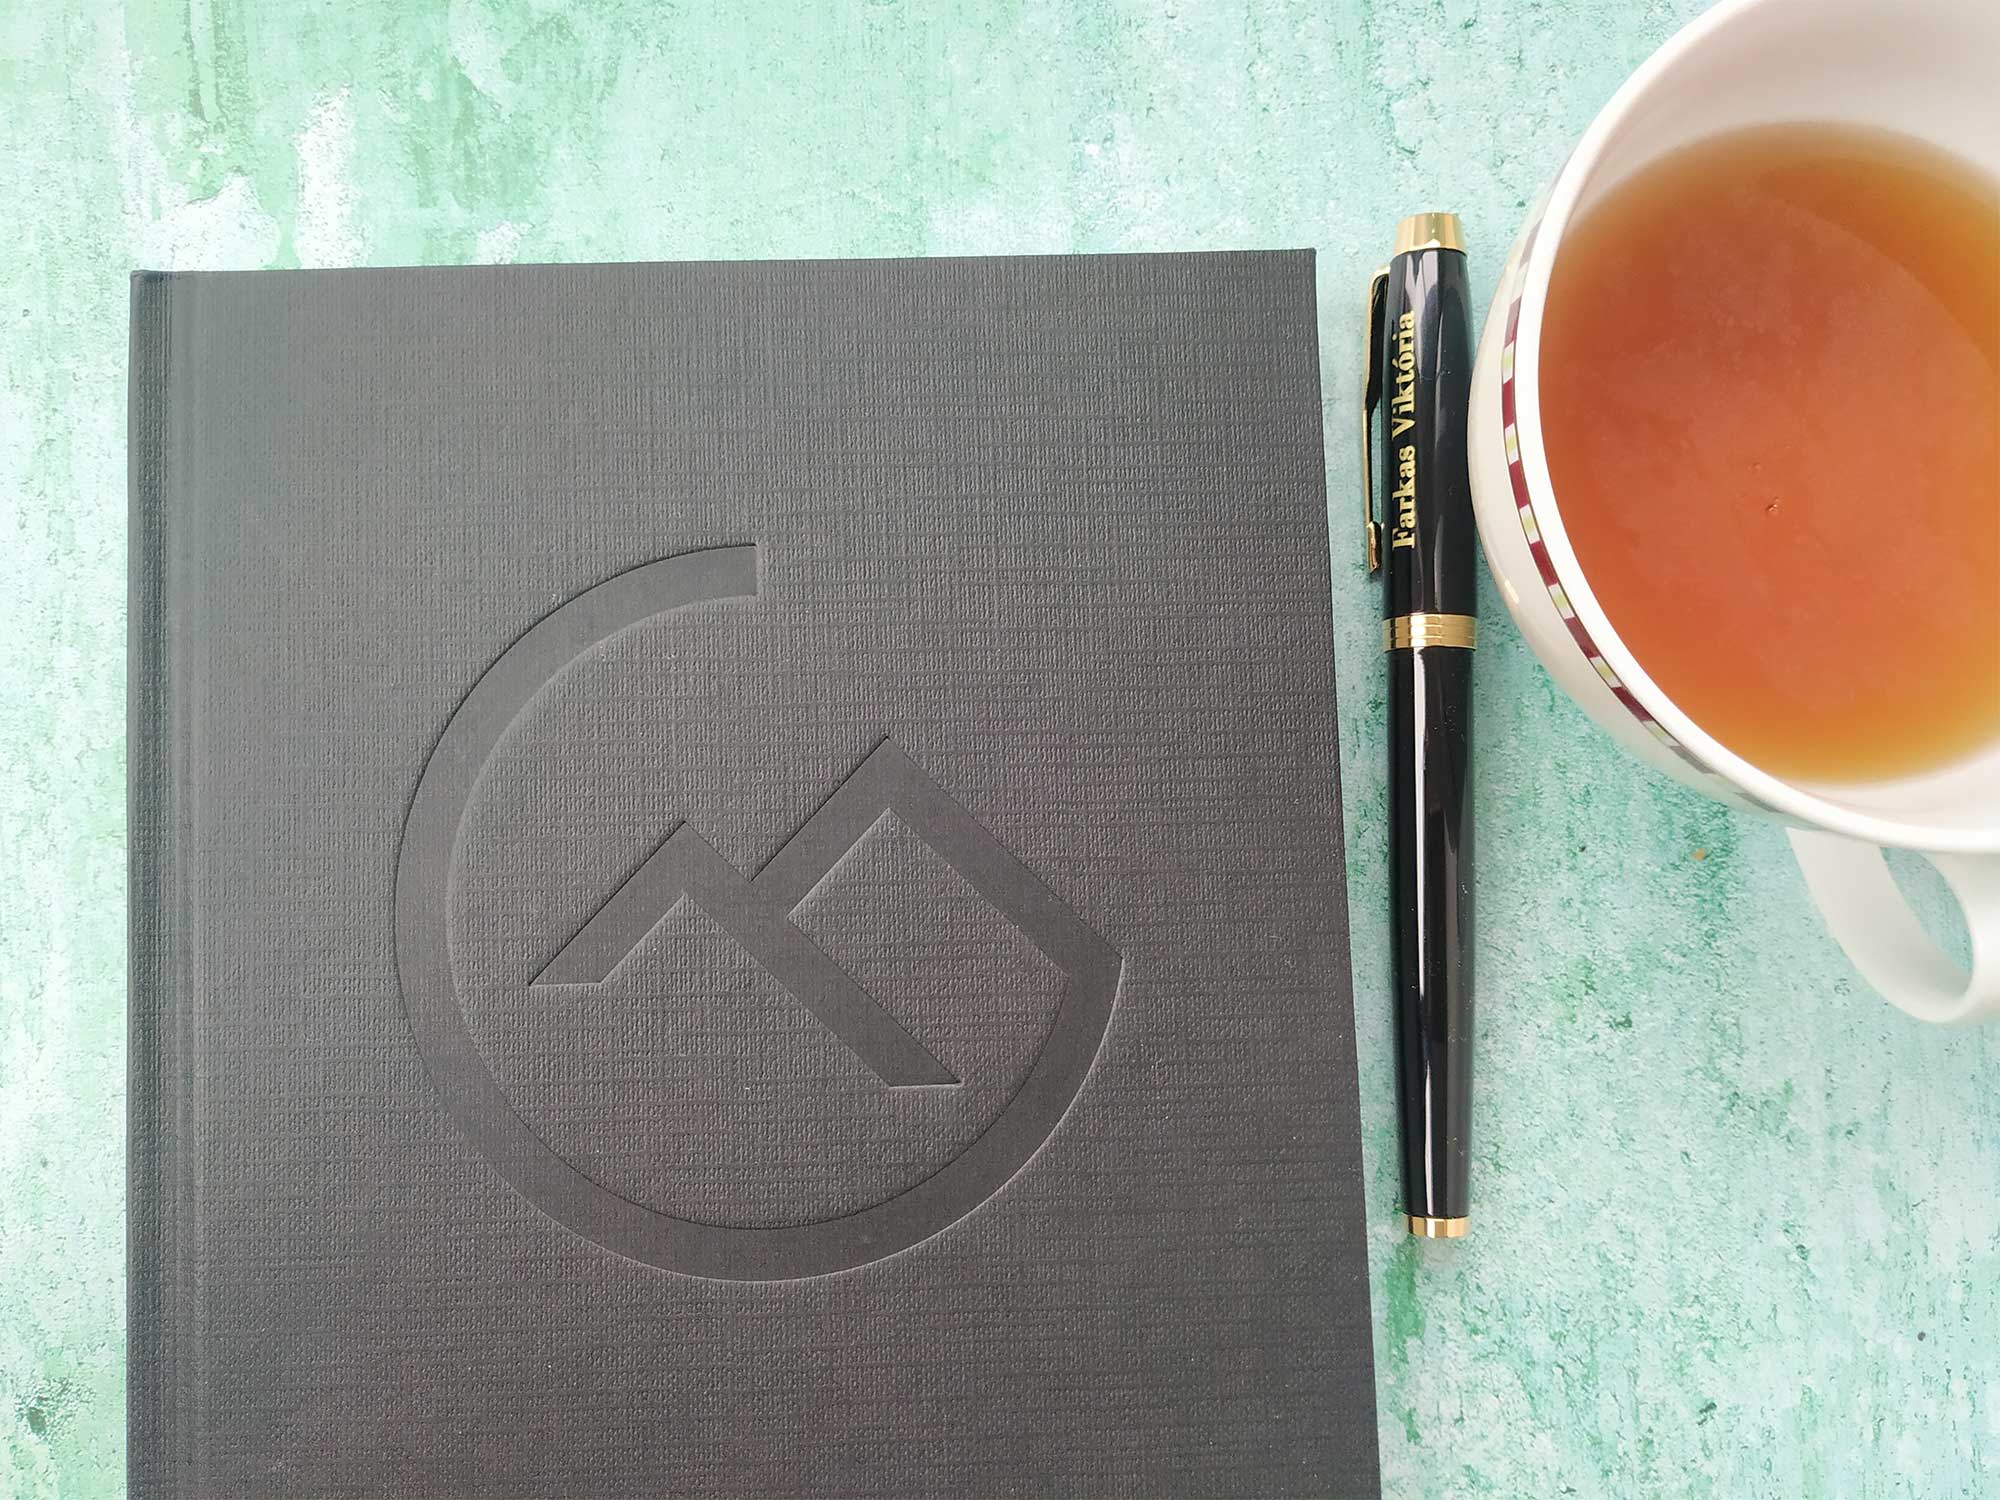 Tea, toll és a fekete napló